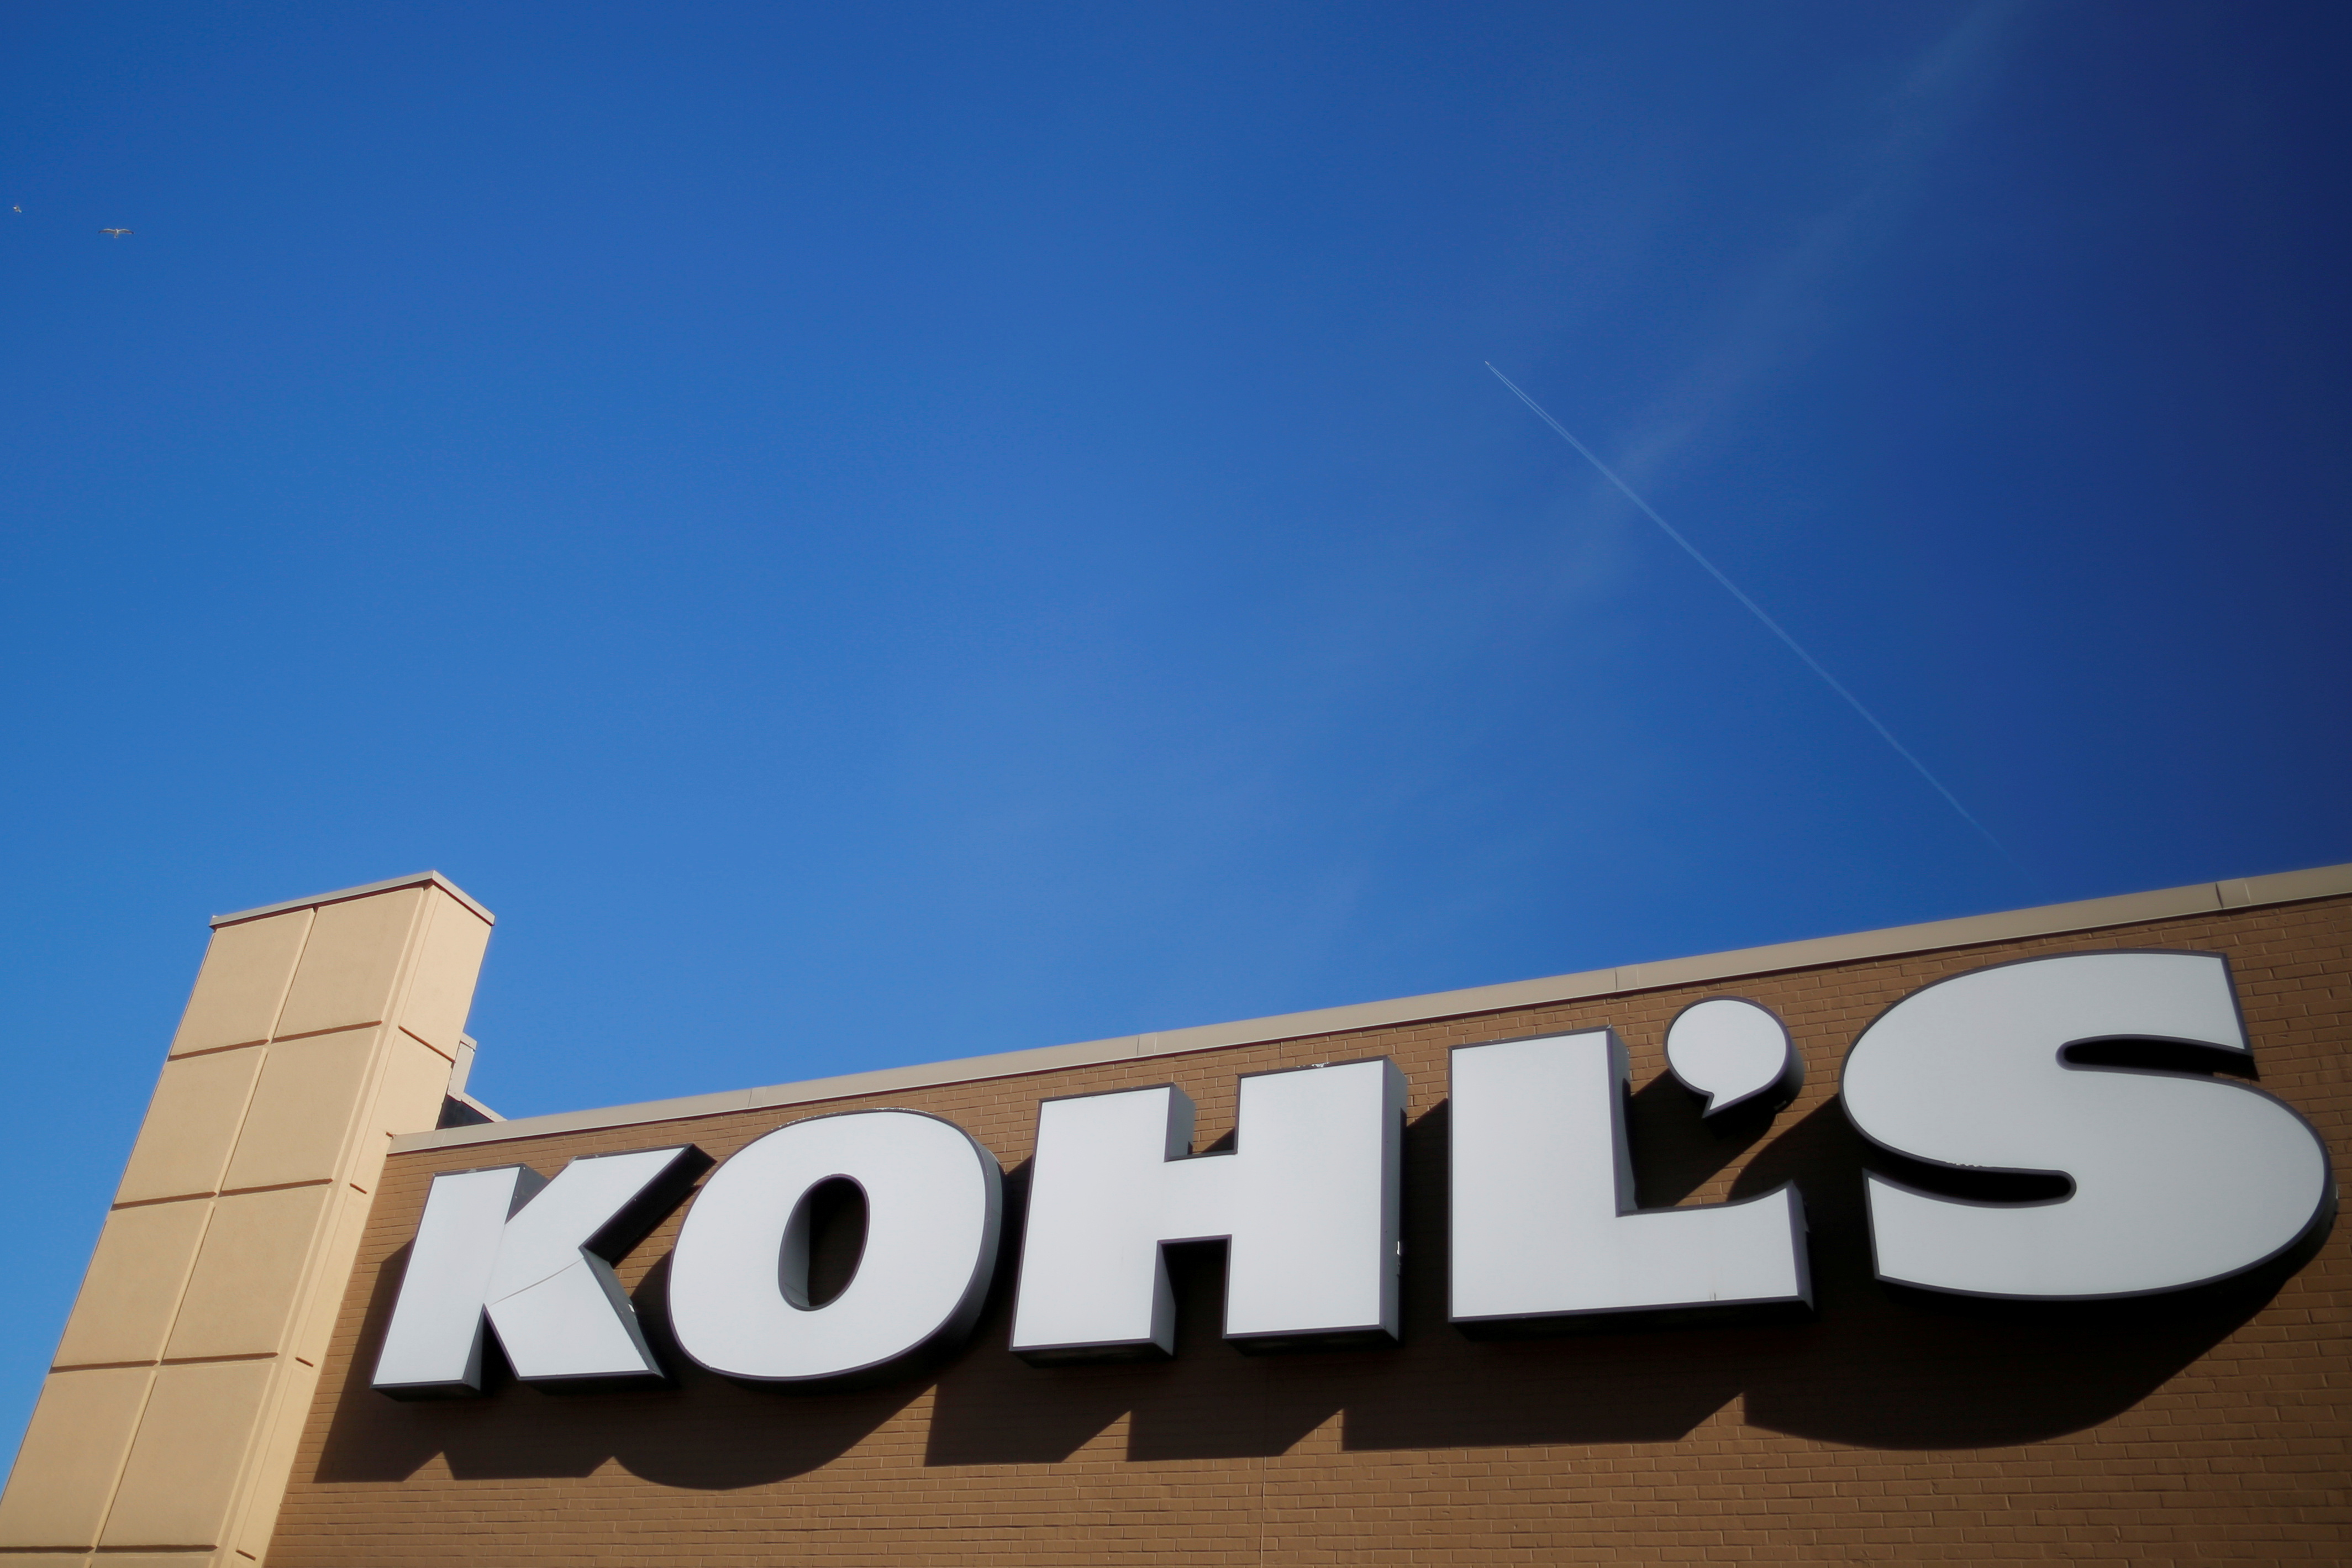 Kohl's beats profit estimates on cost cuts, leaner inventory